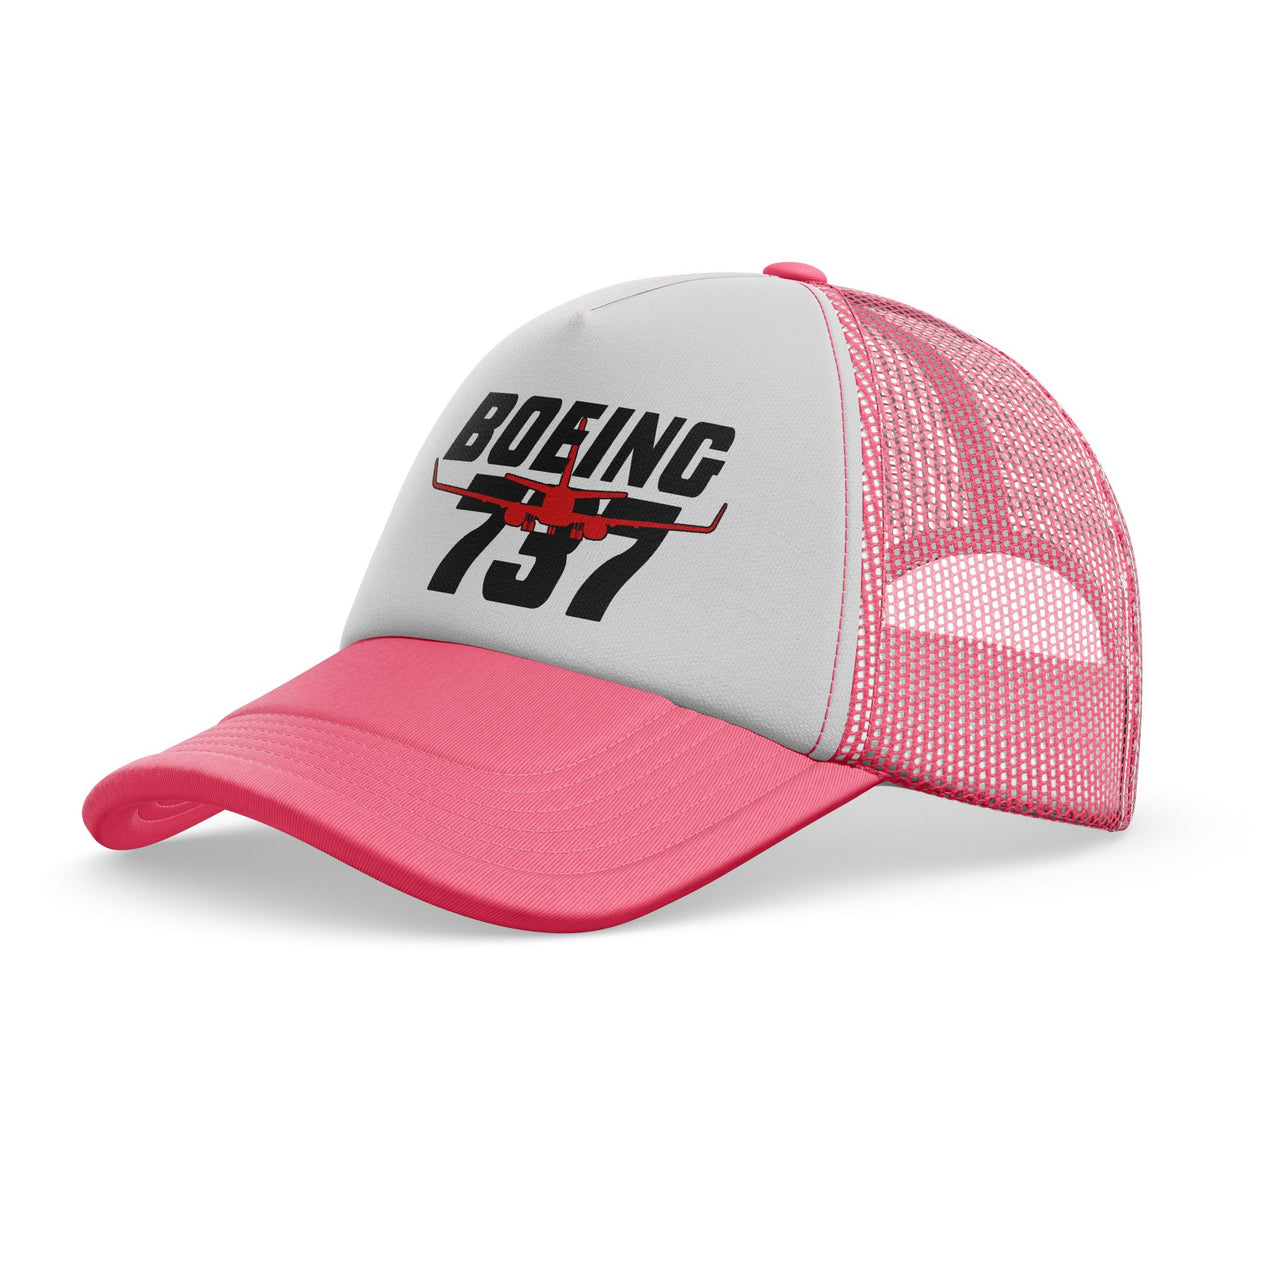 Amazing Boeing 737 Designed Trucker Caps & Hats